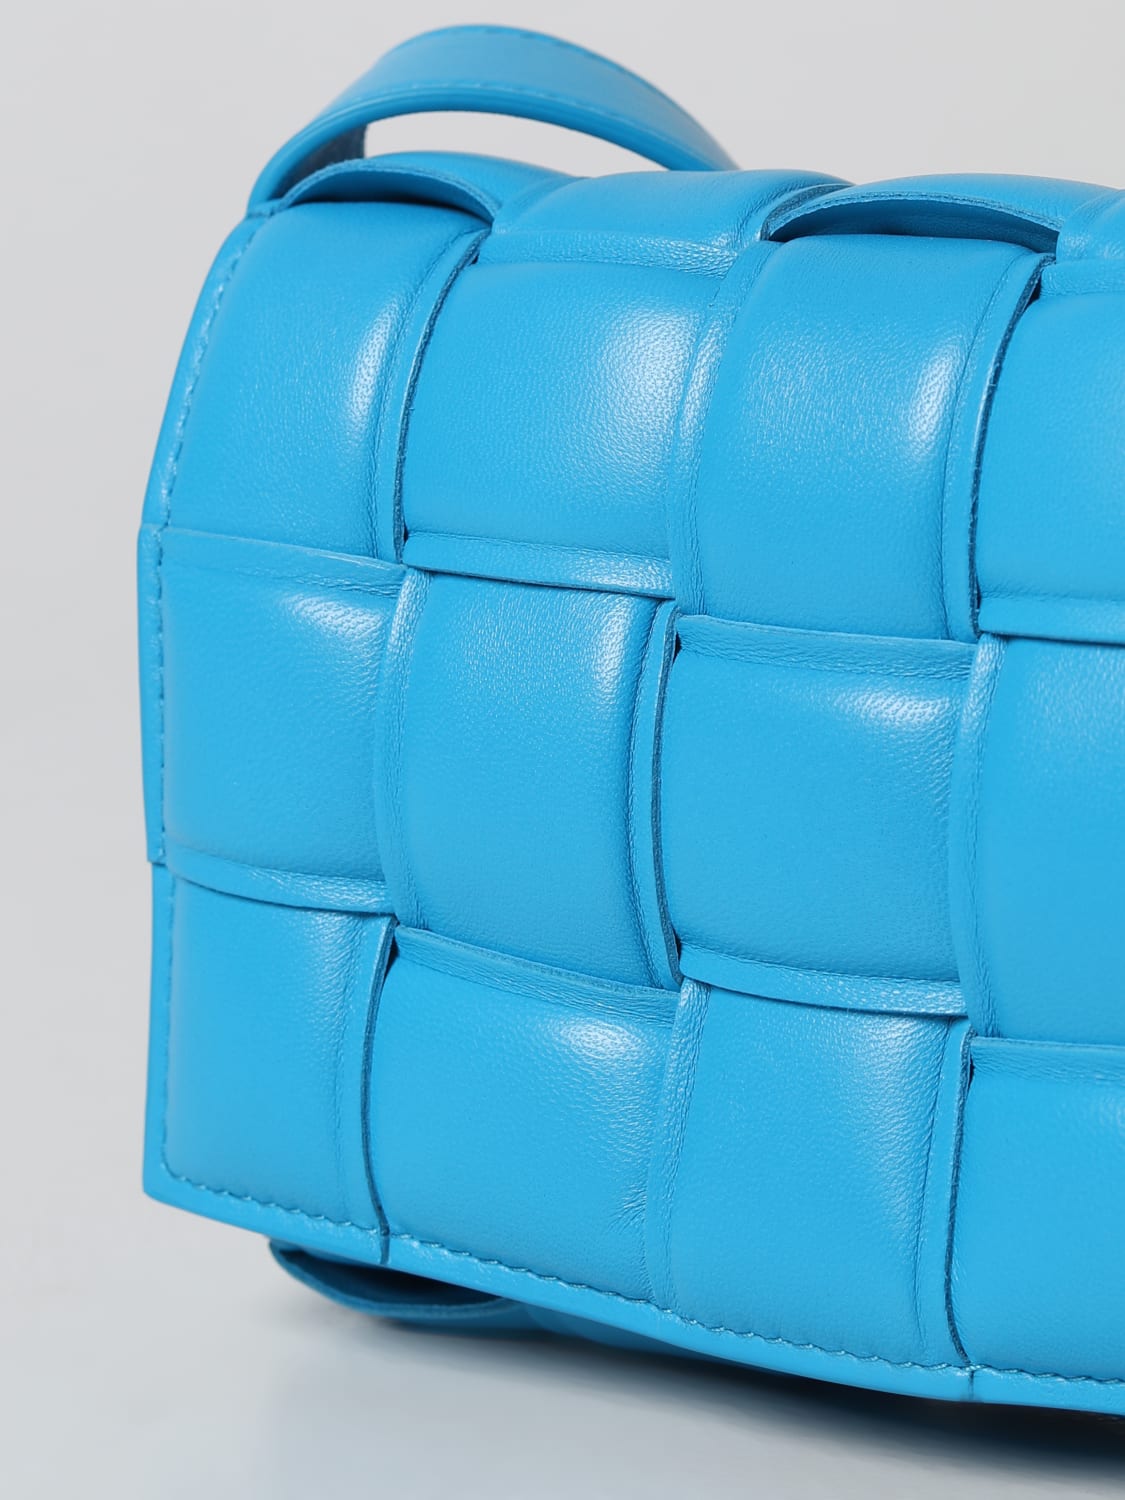 Bottega Veneta Ice Blue Calfskin Mini Pouch Gold Hardware, 2020s (Like New), Womens Handbag